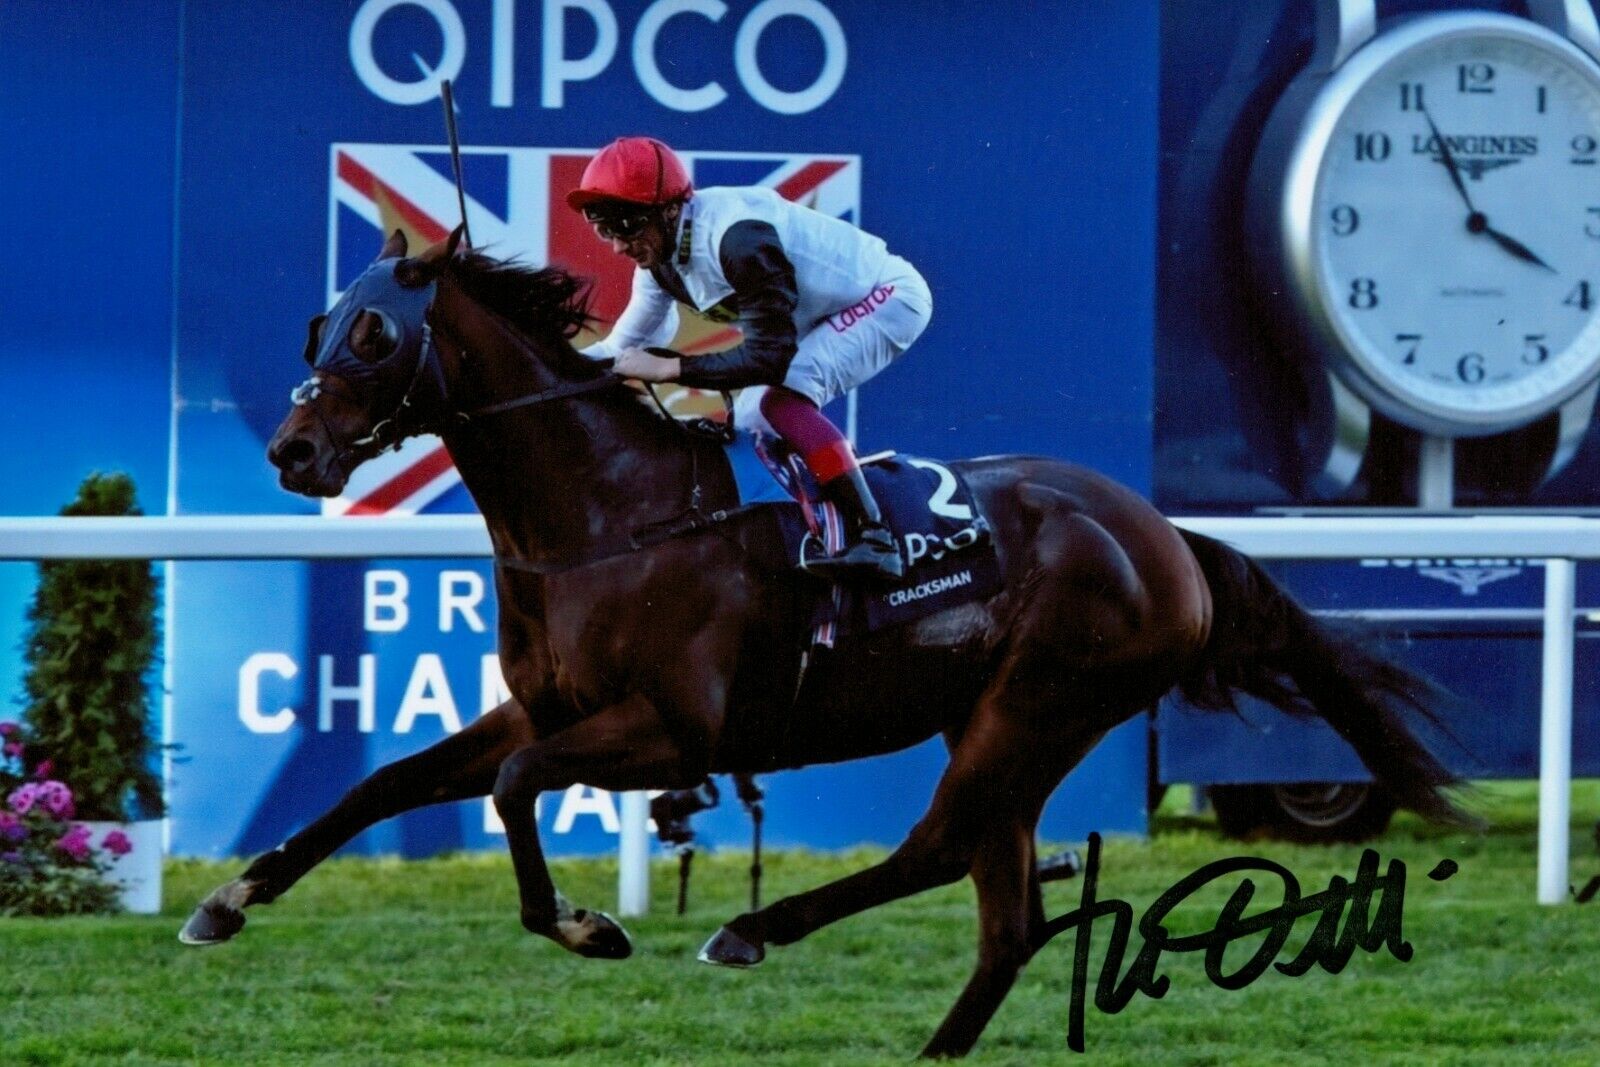 Frankie Dettori Signed 6x4 Photo Poster painting Horse Racing Legend Autograph Memorabilia + COA